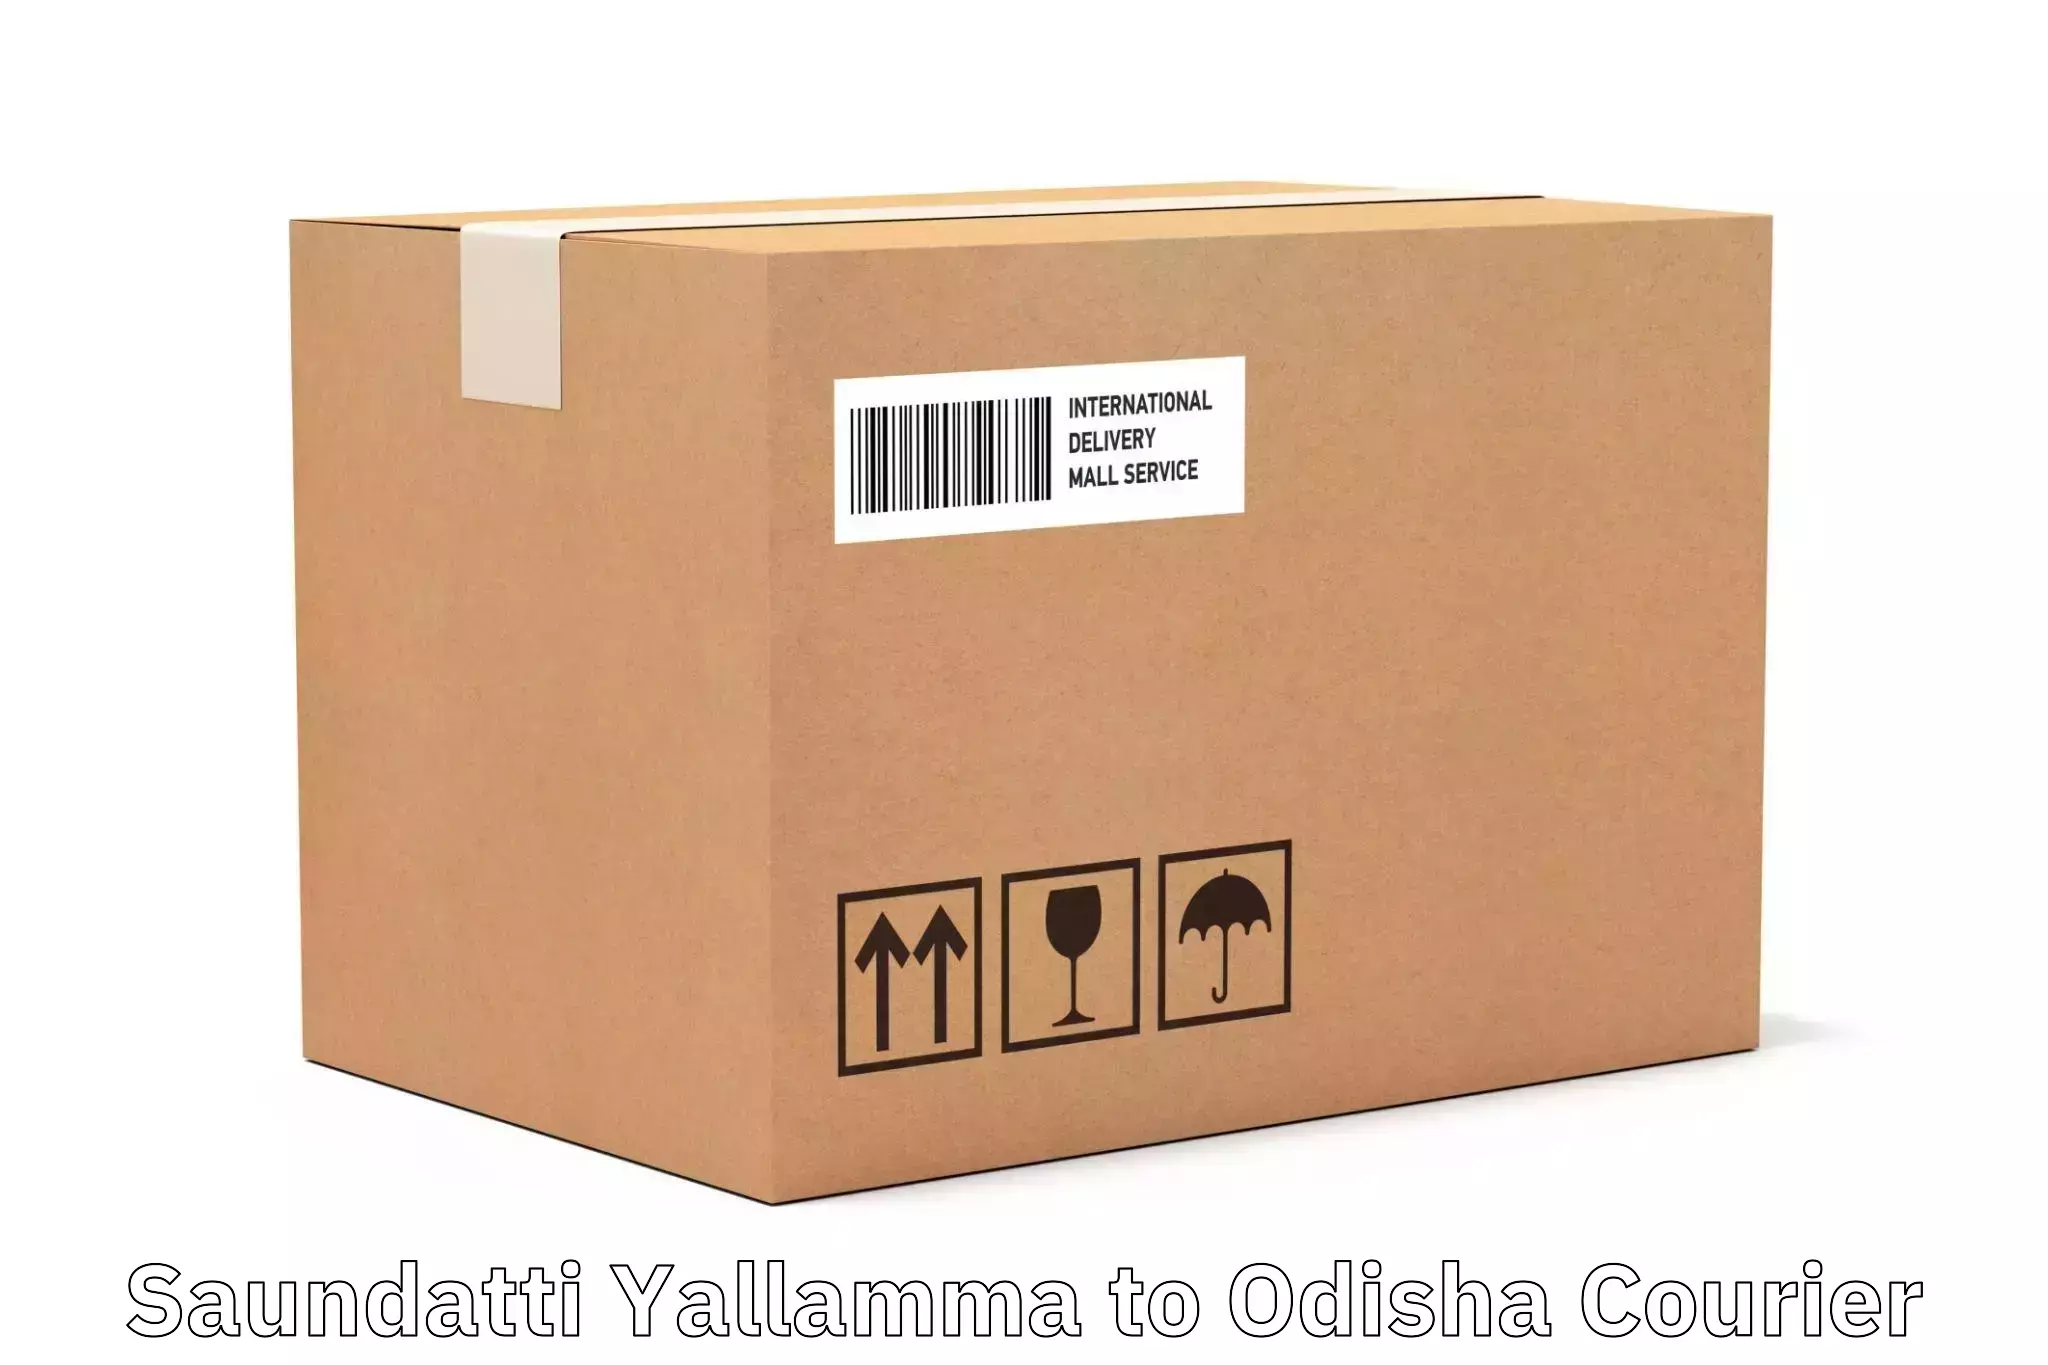 Scheduled delivery Saundatti Yallamma to Odisha